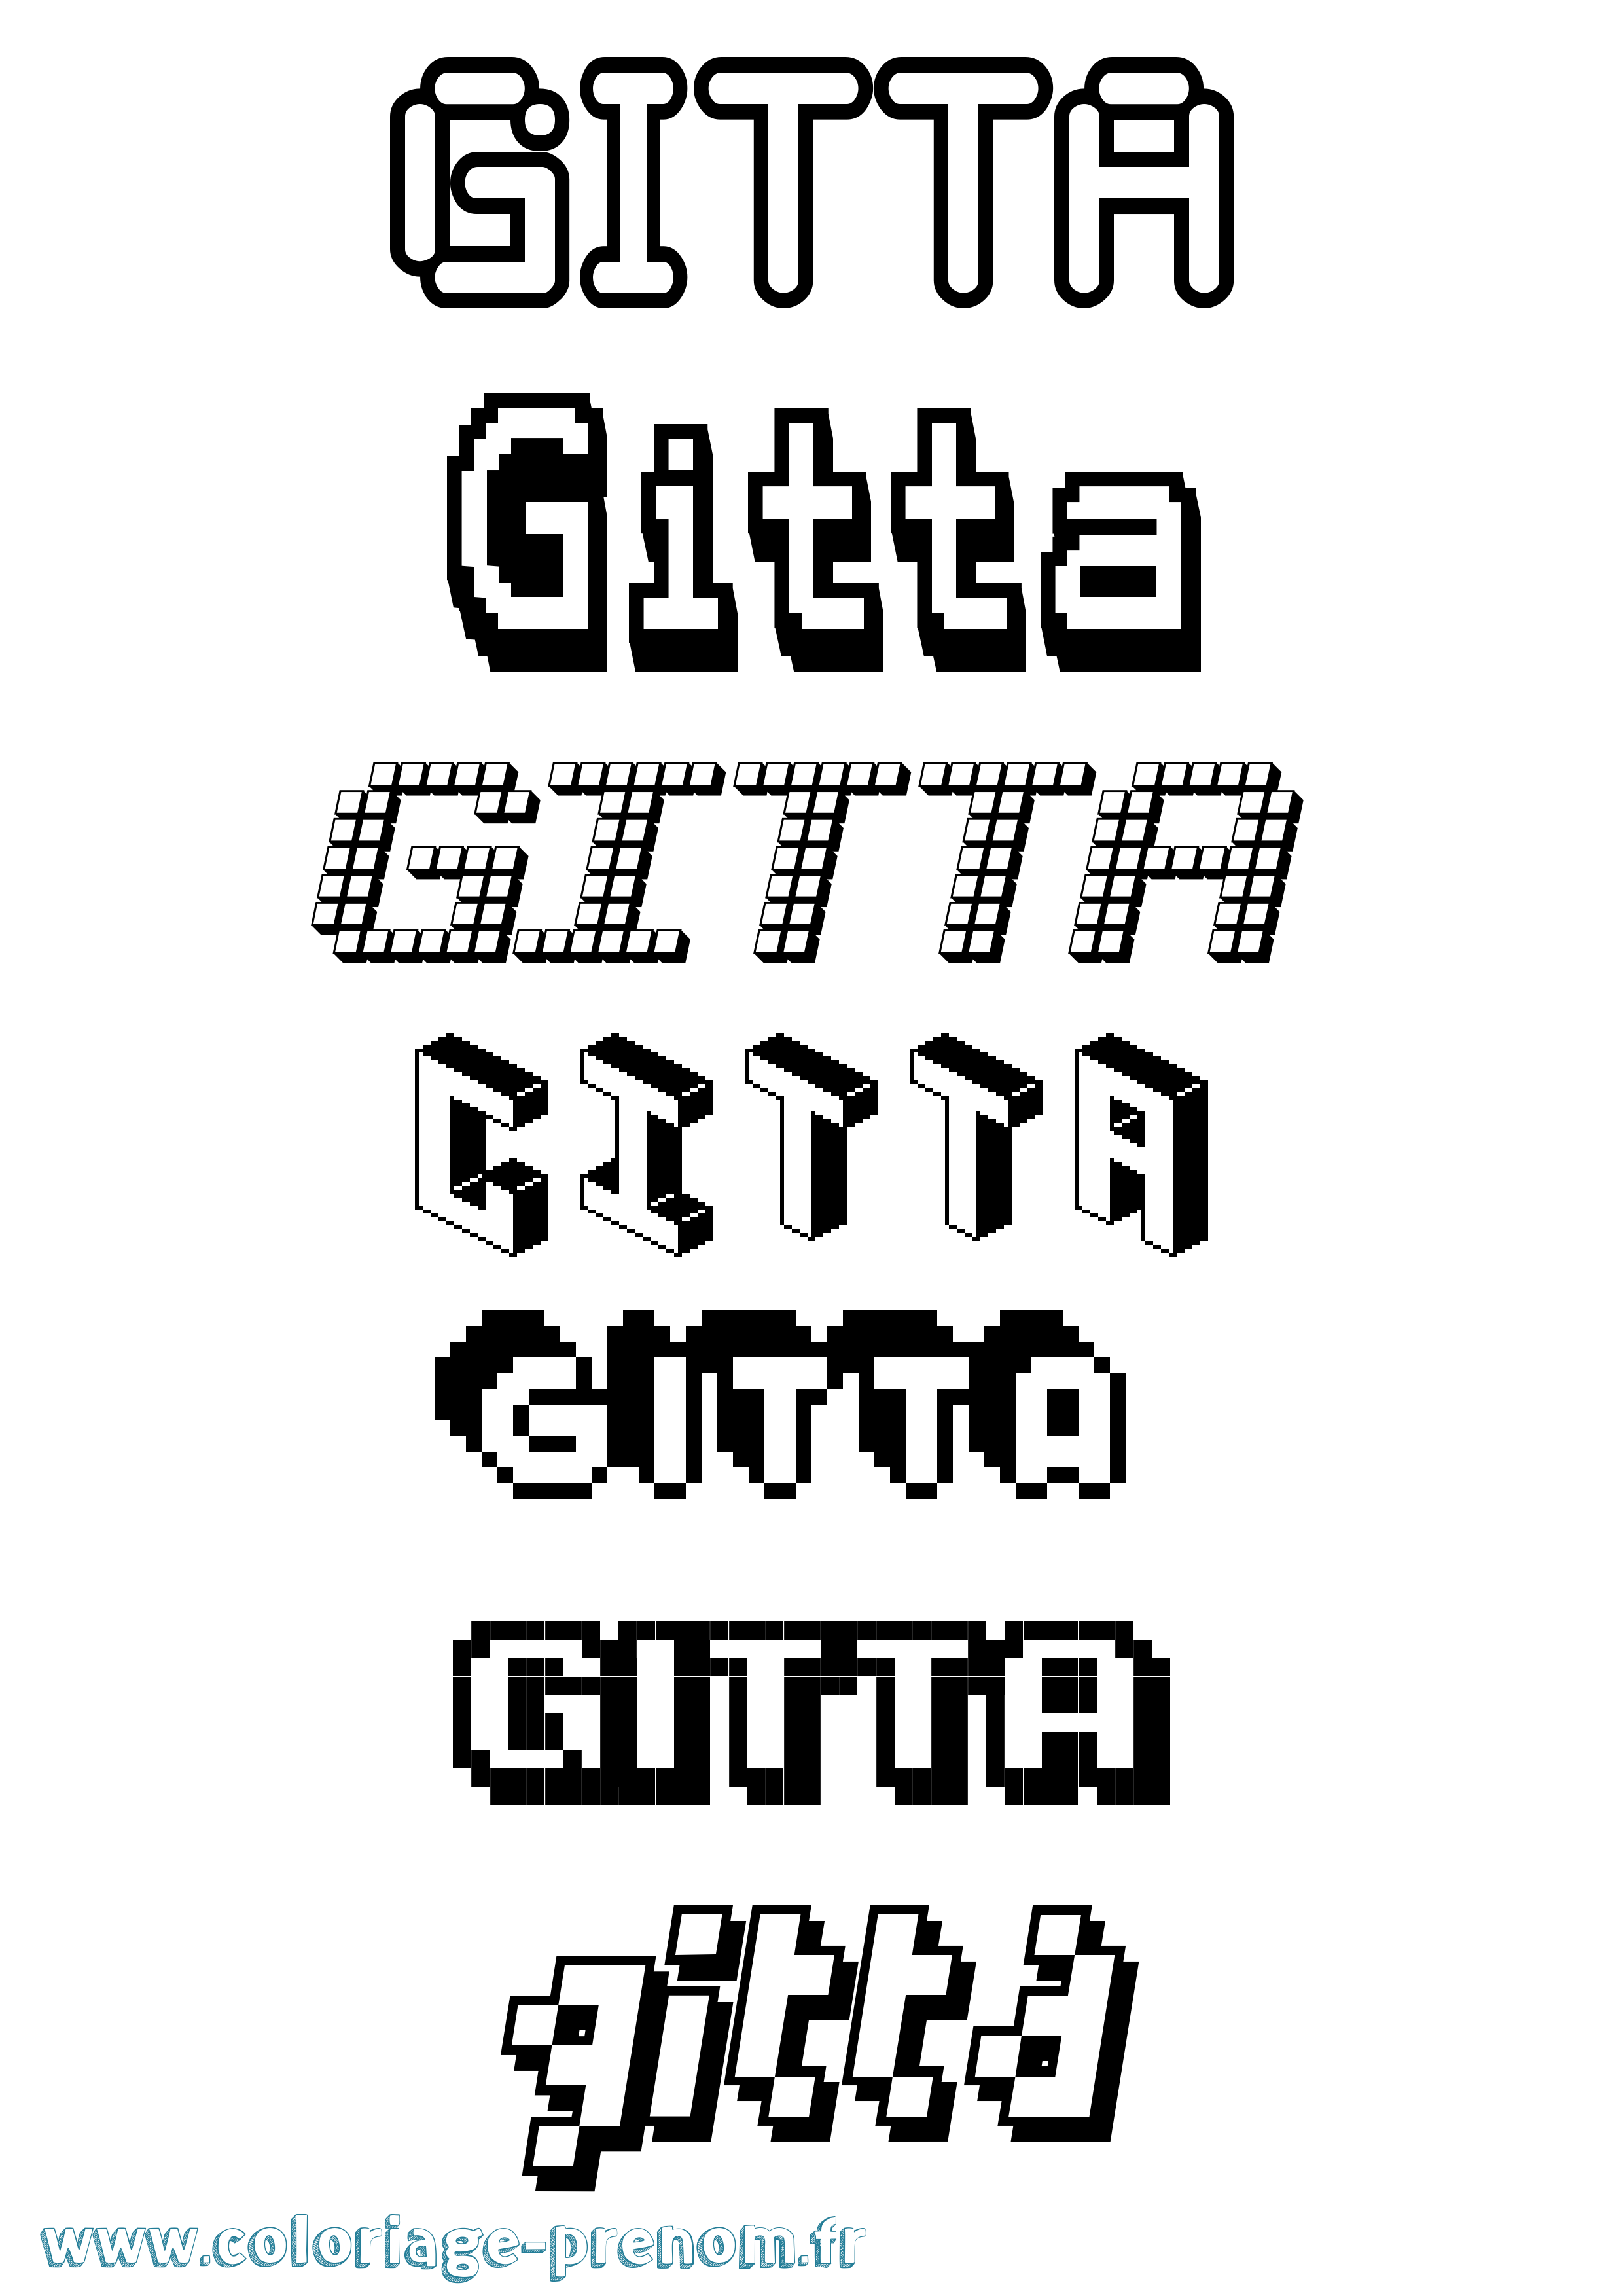 Coloriage prénom Gitta Pixel